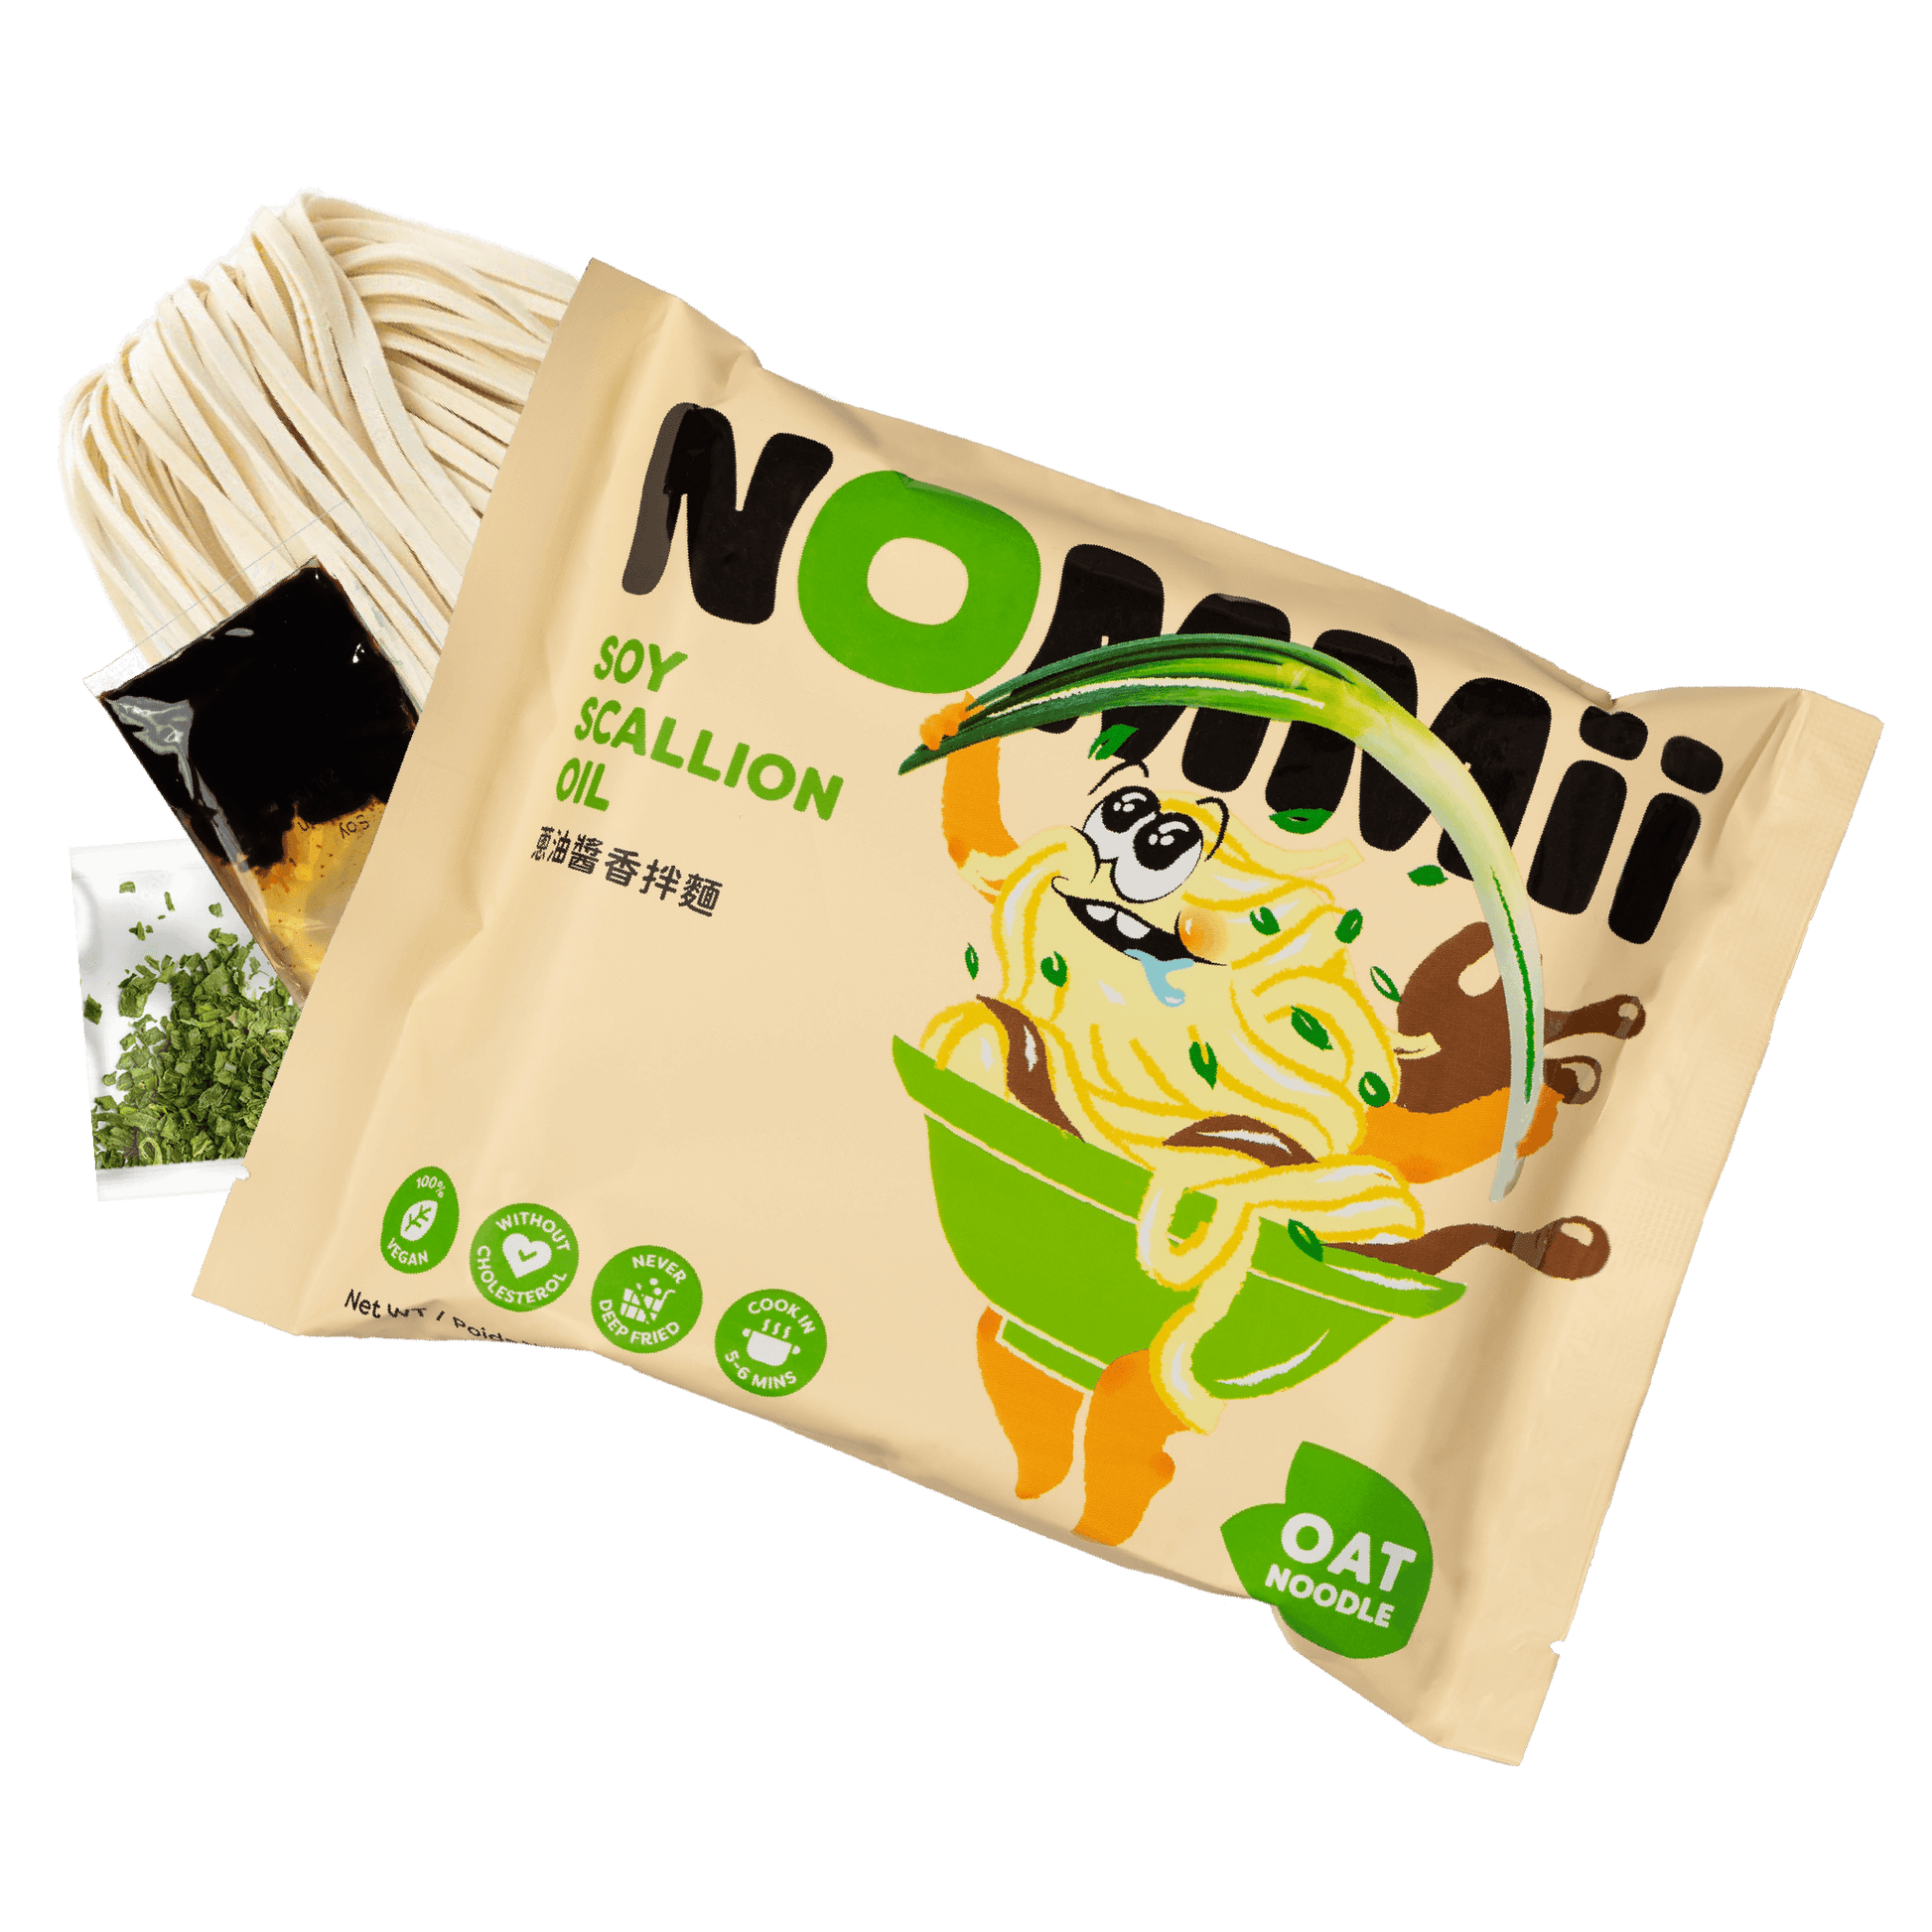 [Preorder] Soy Scallion Oil Oat Noodles (8-Pack) - NOMMii